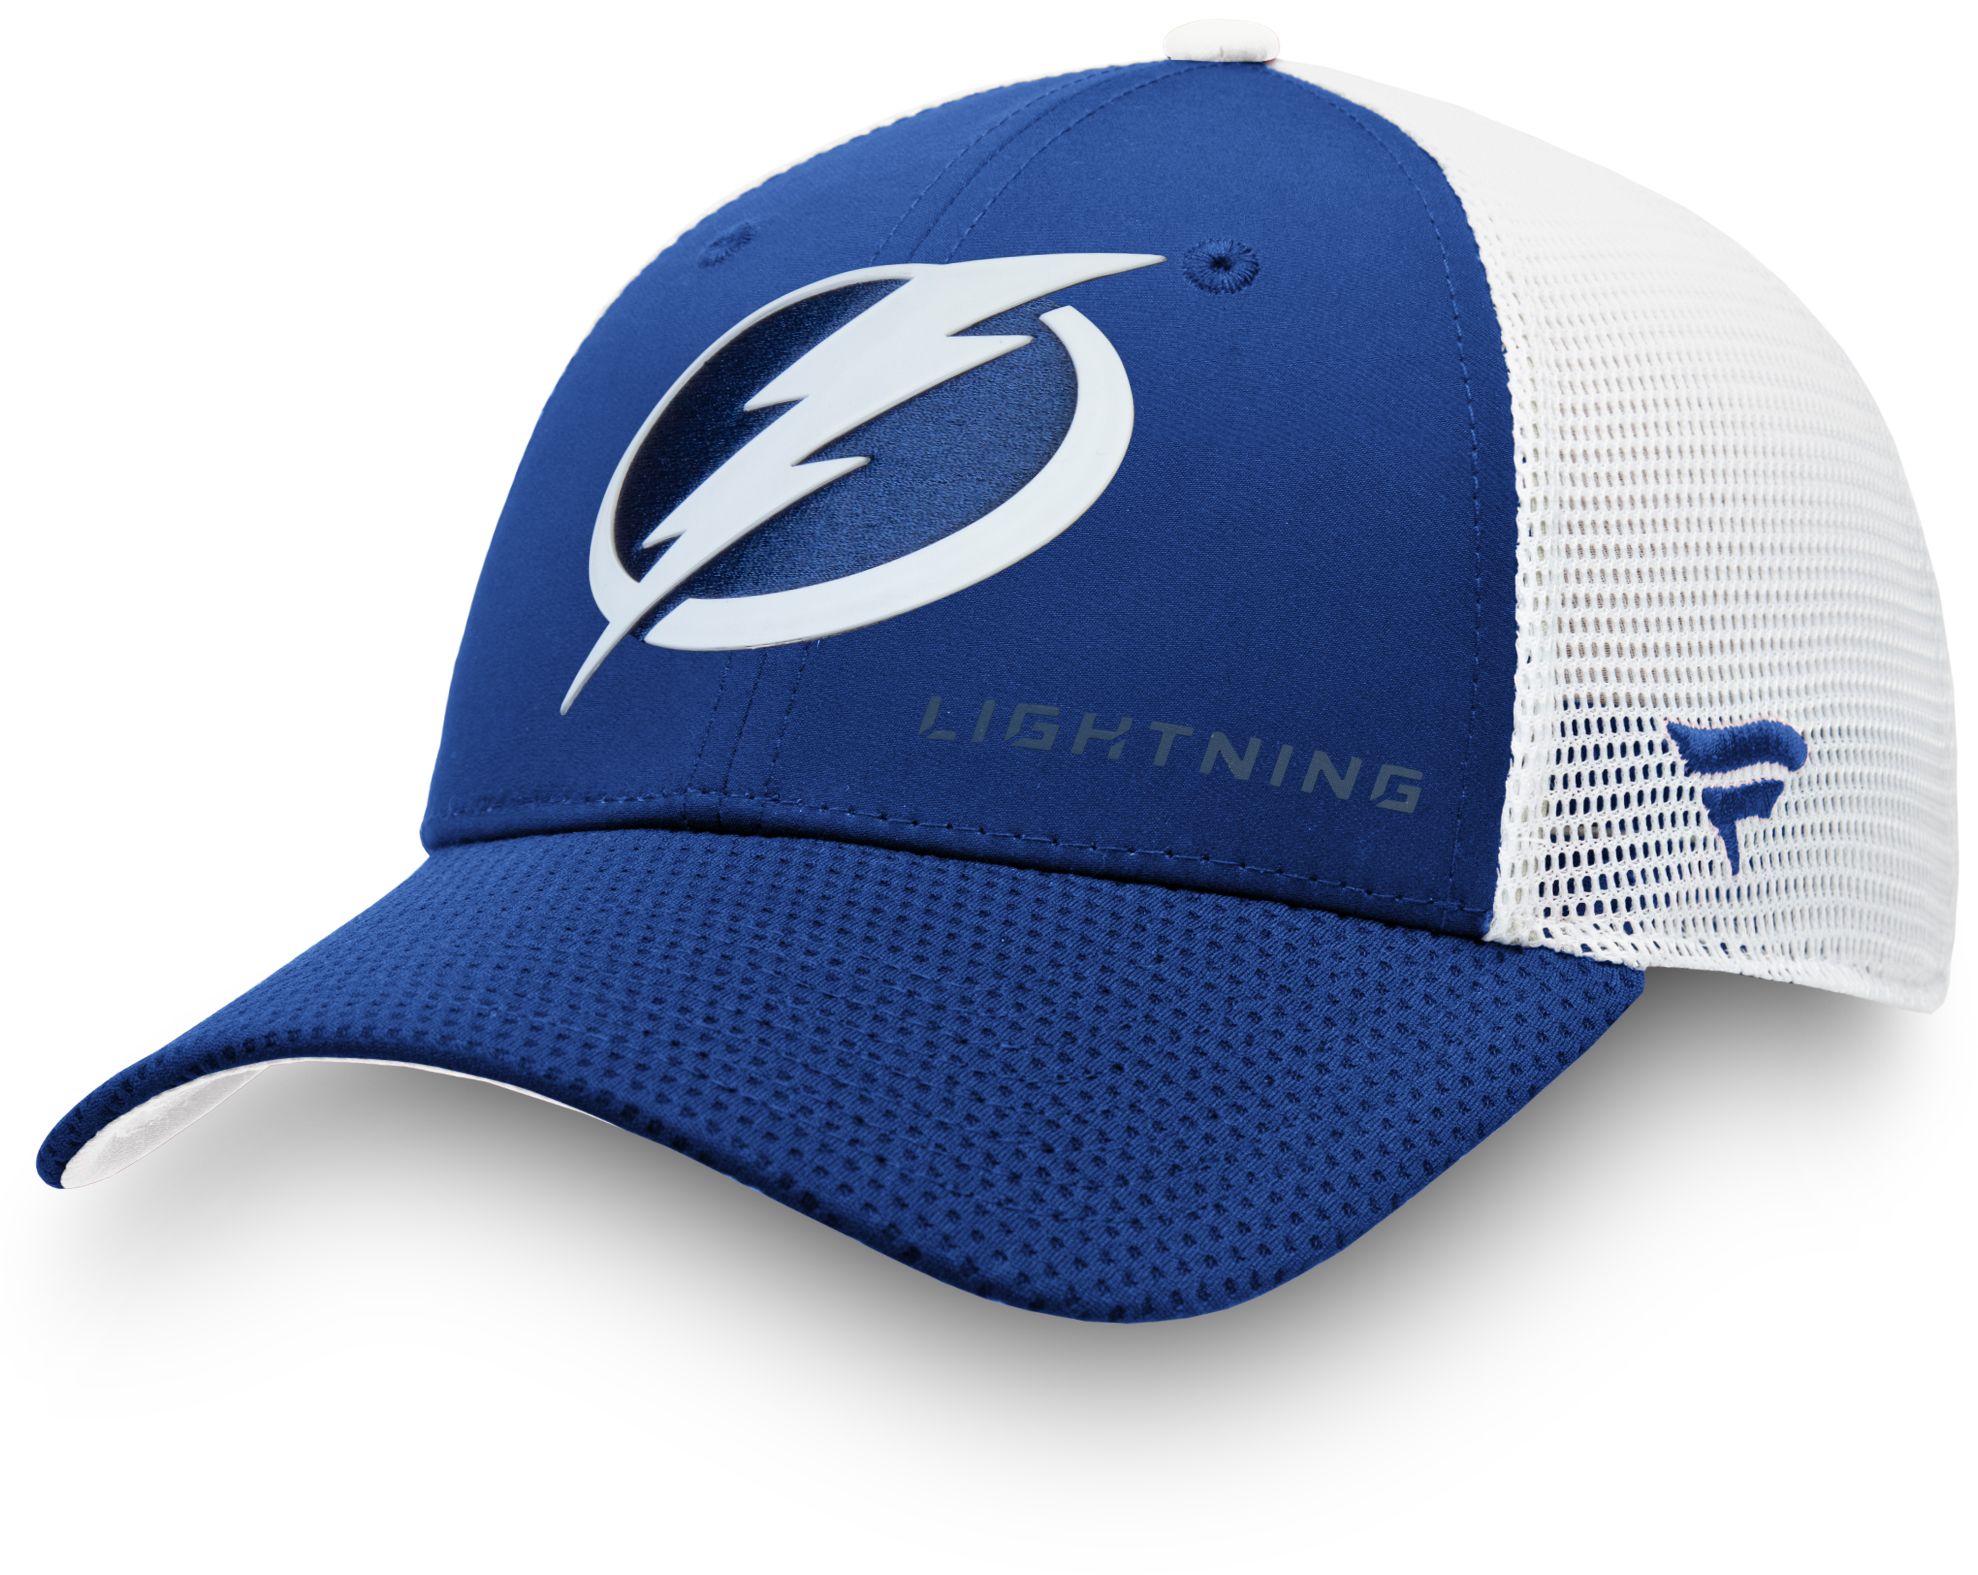 lightning playoff hat